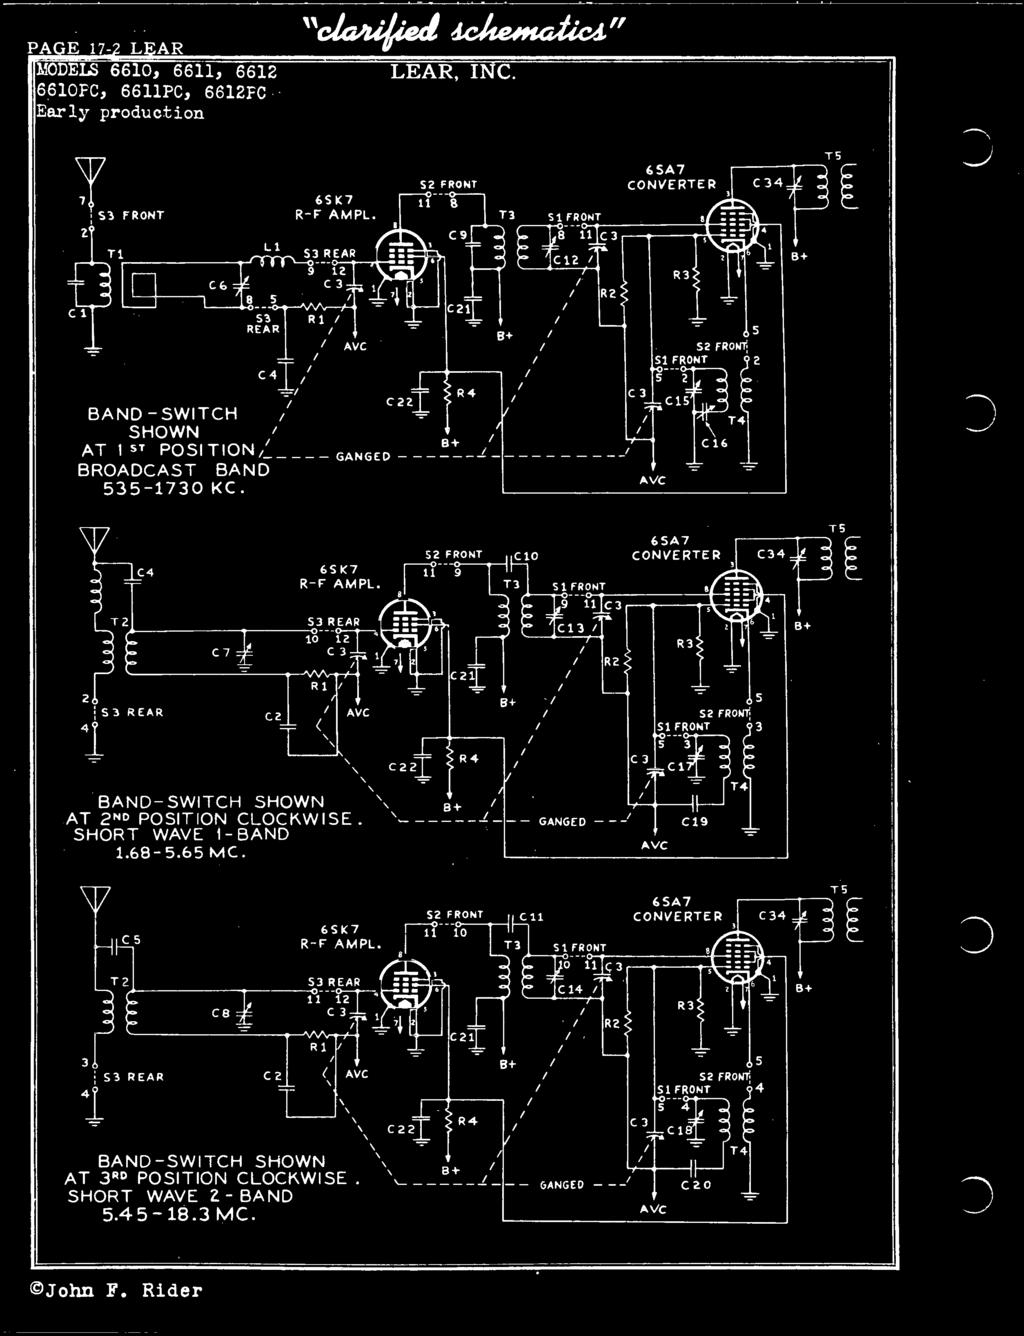 C4 CVERTER C7 53 REAR 1 121 C 3 l 44 3 REAR C2 BAD -SWITCH SHW AT 2D PSITI CLCKWISE. SHRT WAVE 1- BAD 1.68-5.65 MC. C5 6SK7 R -F AMPL.